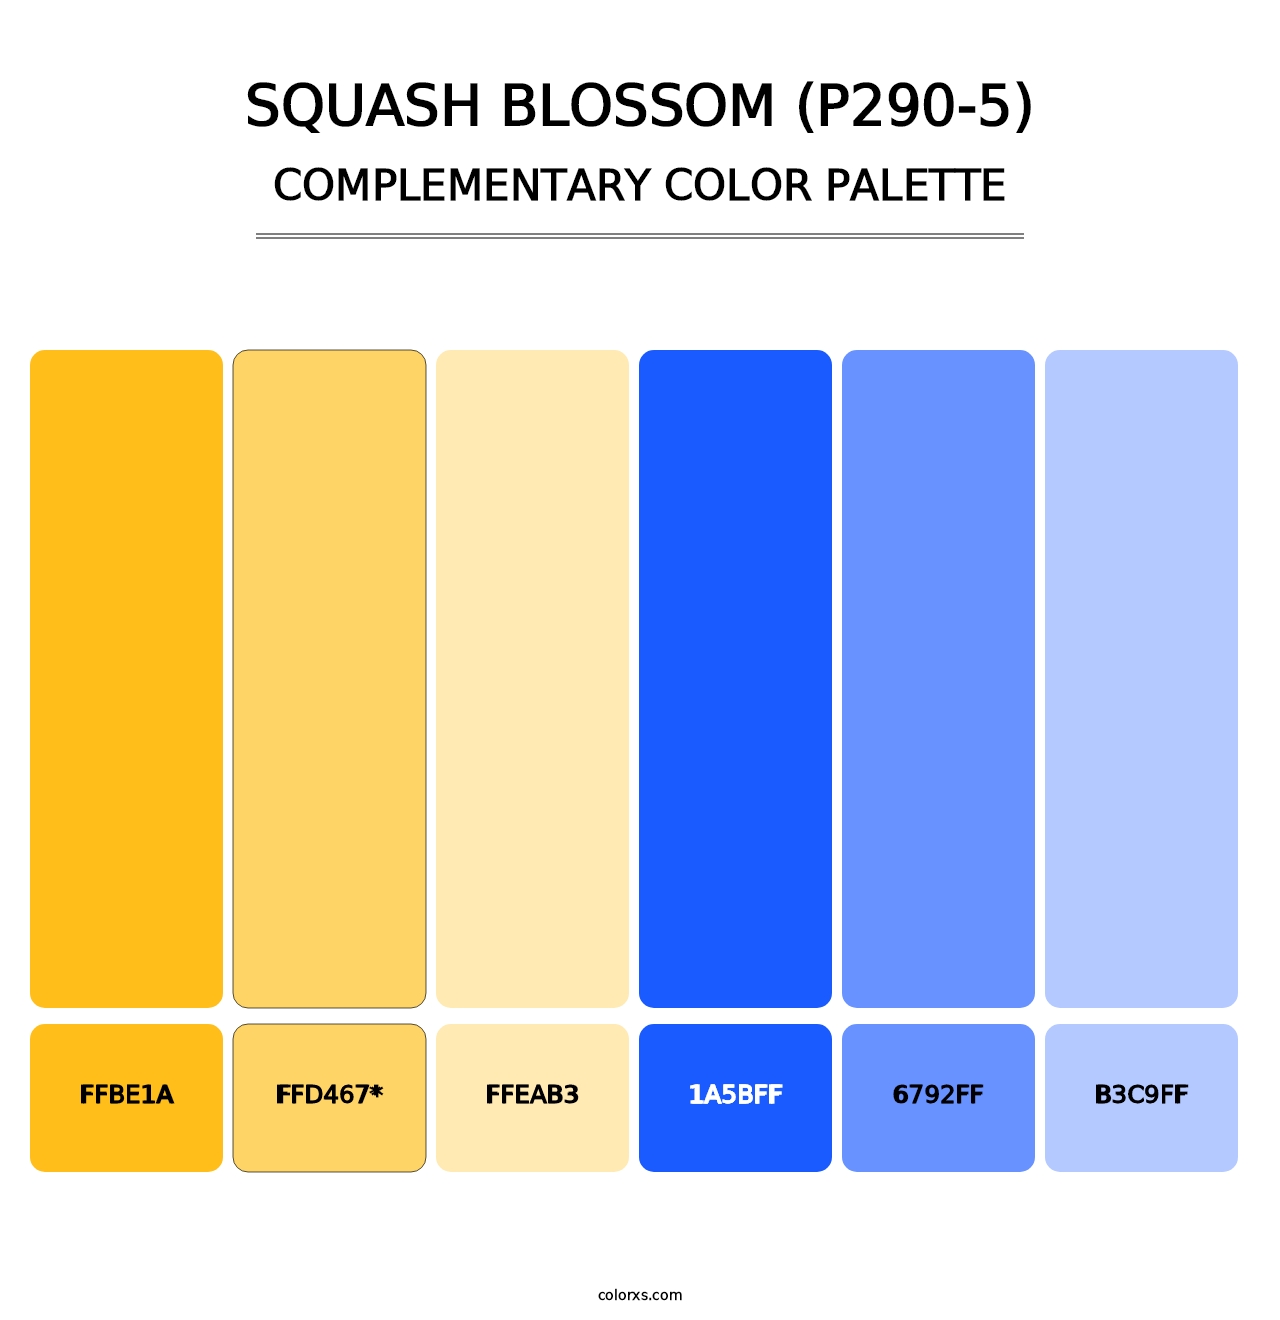 Squash Blossom (P290-5) - Complementary Color Palette